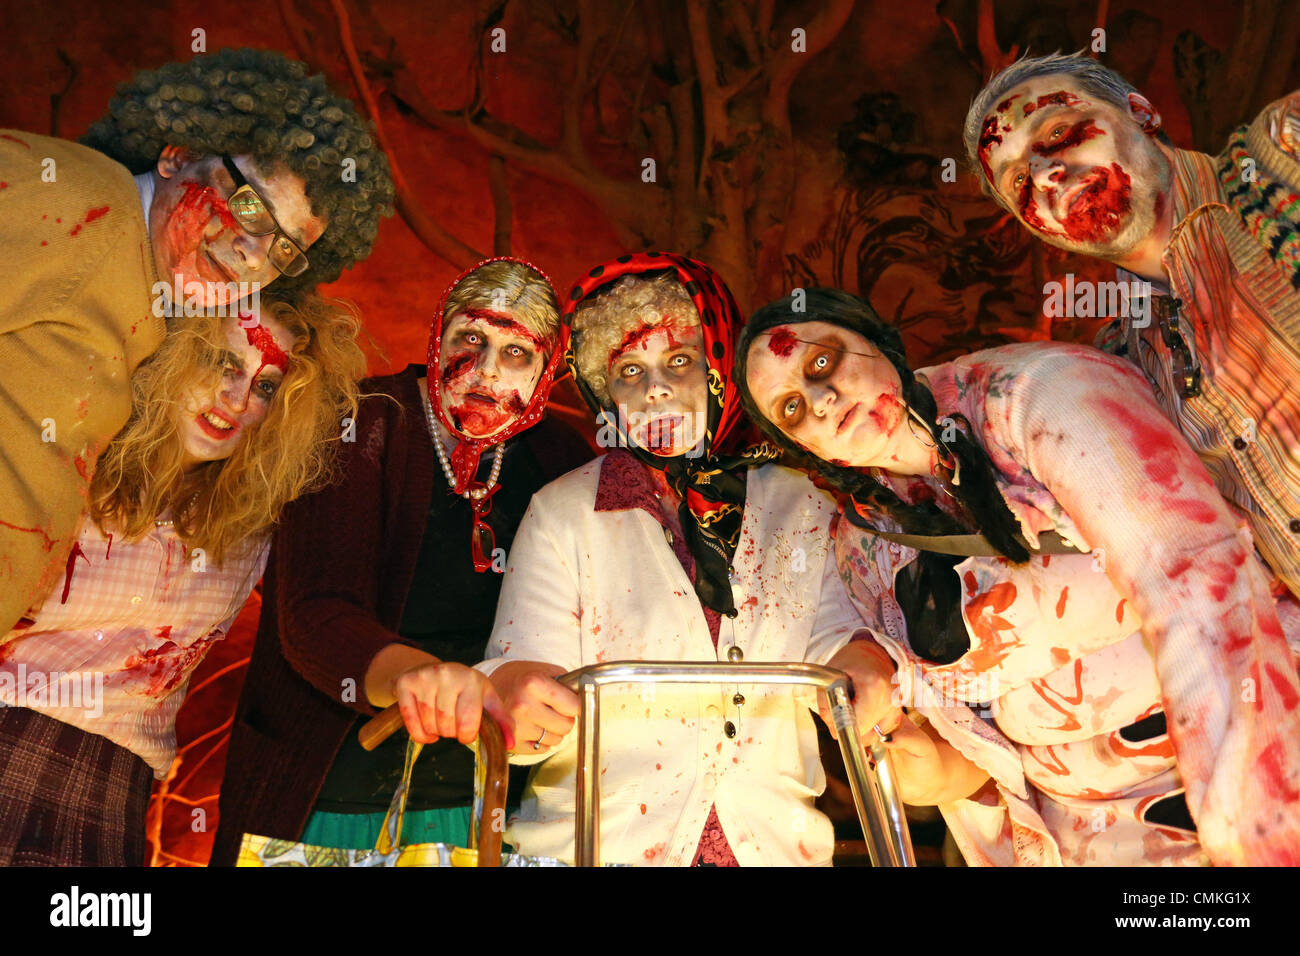 London, UK. 2. November 2013. Teilnehmer verkleidet als Zombies für den London Zombie Walk 2013, London, England feiert Halloween und allen Dingen Zombie Credit: Paul Brown/Alamy Live News Stockfoto